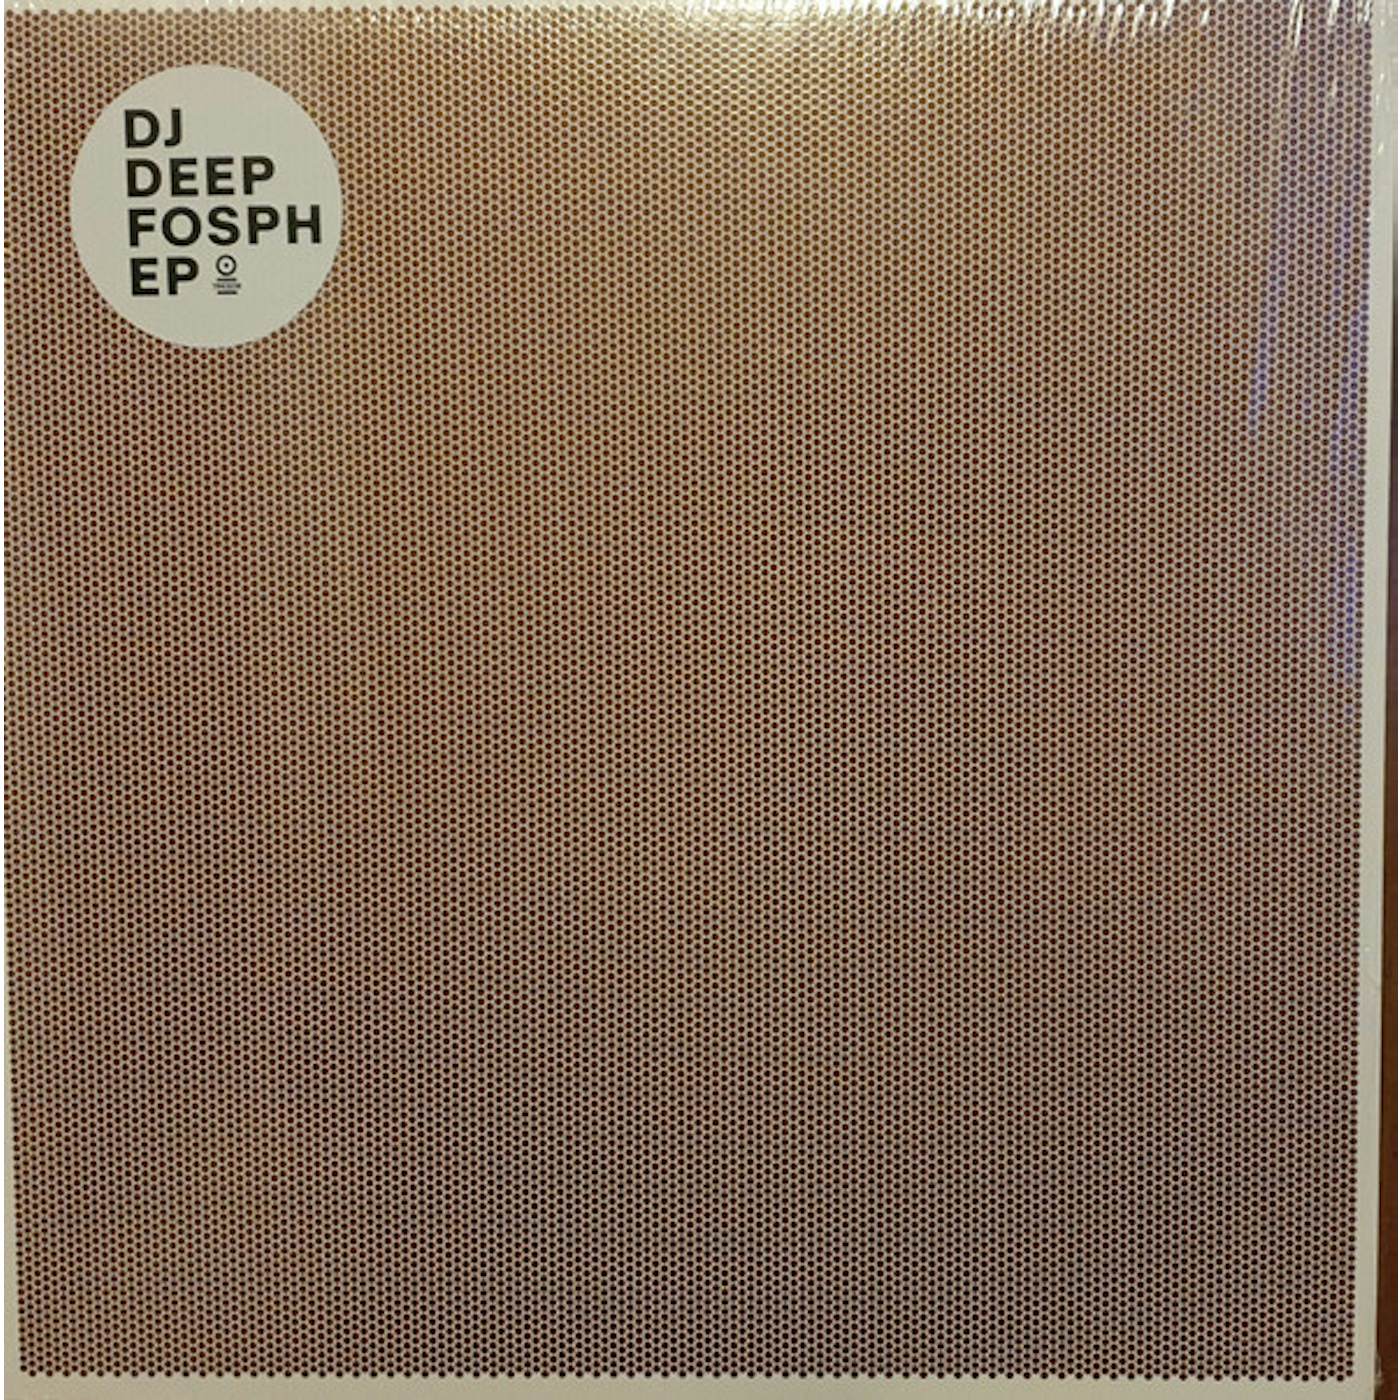 DJ Deep FOSPH Vinyl Record